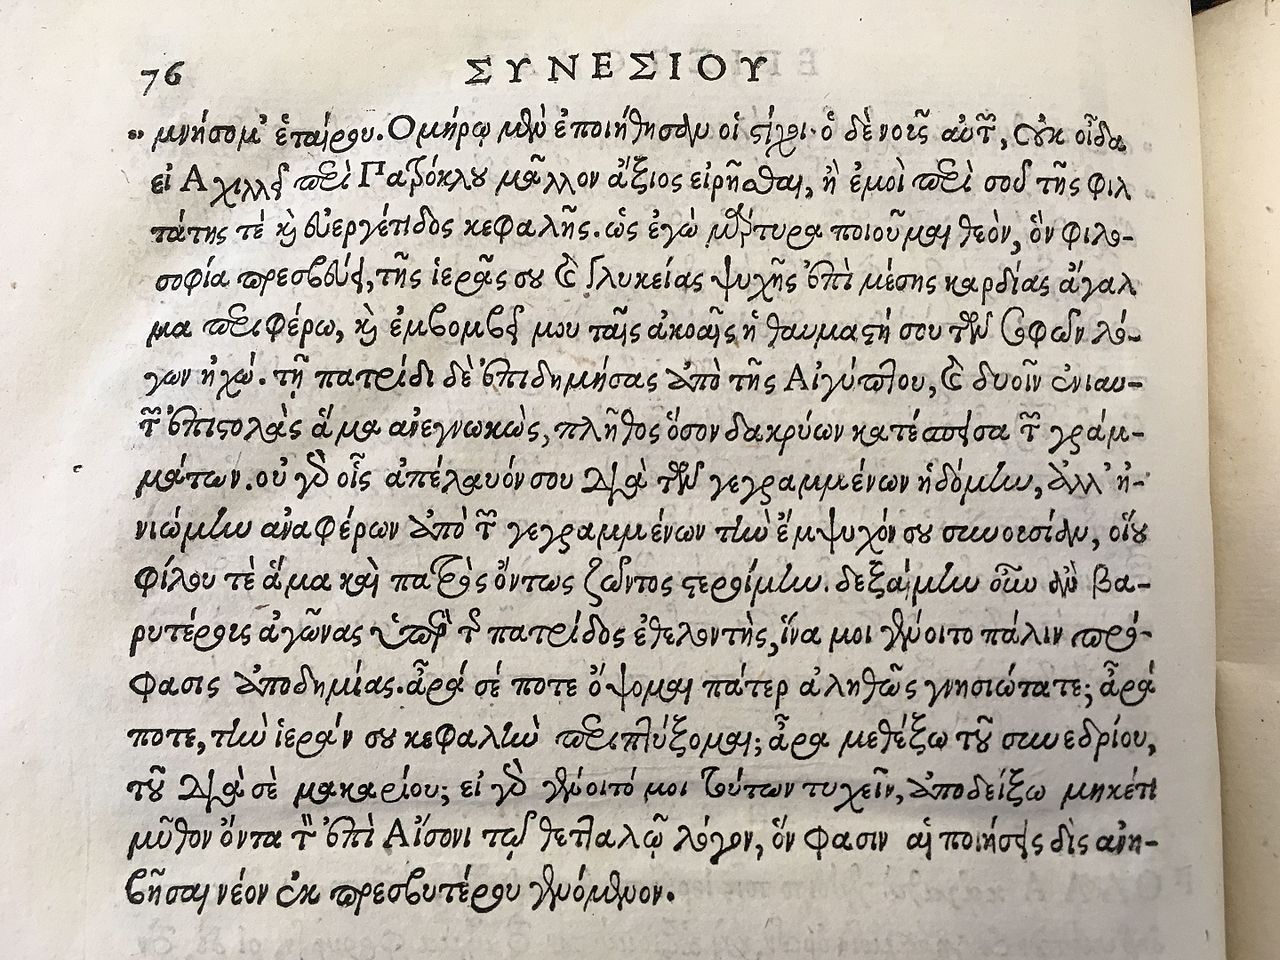 Source: https://en.wikipedia.org/wiki/File:Letter_of_Synesius_to_Hypatia_b2.jpg